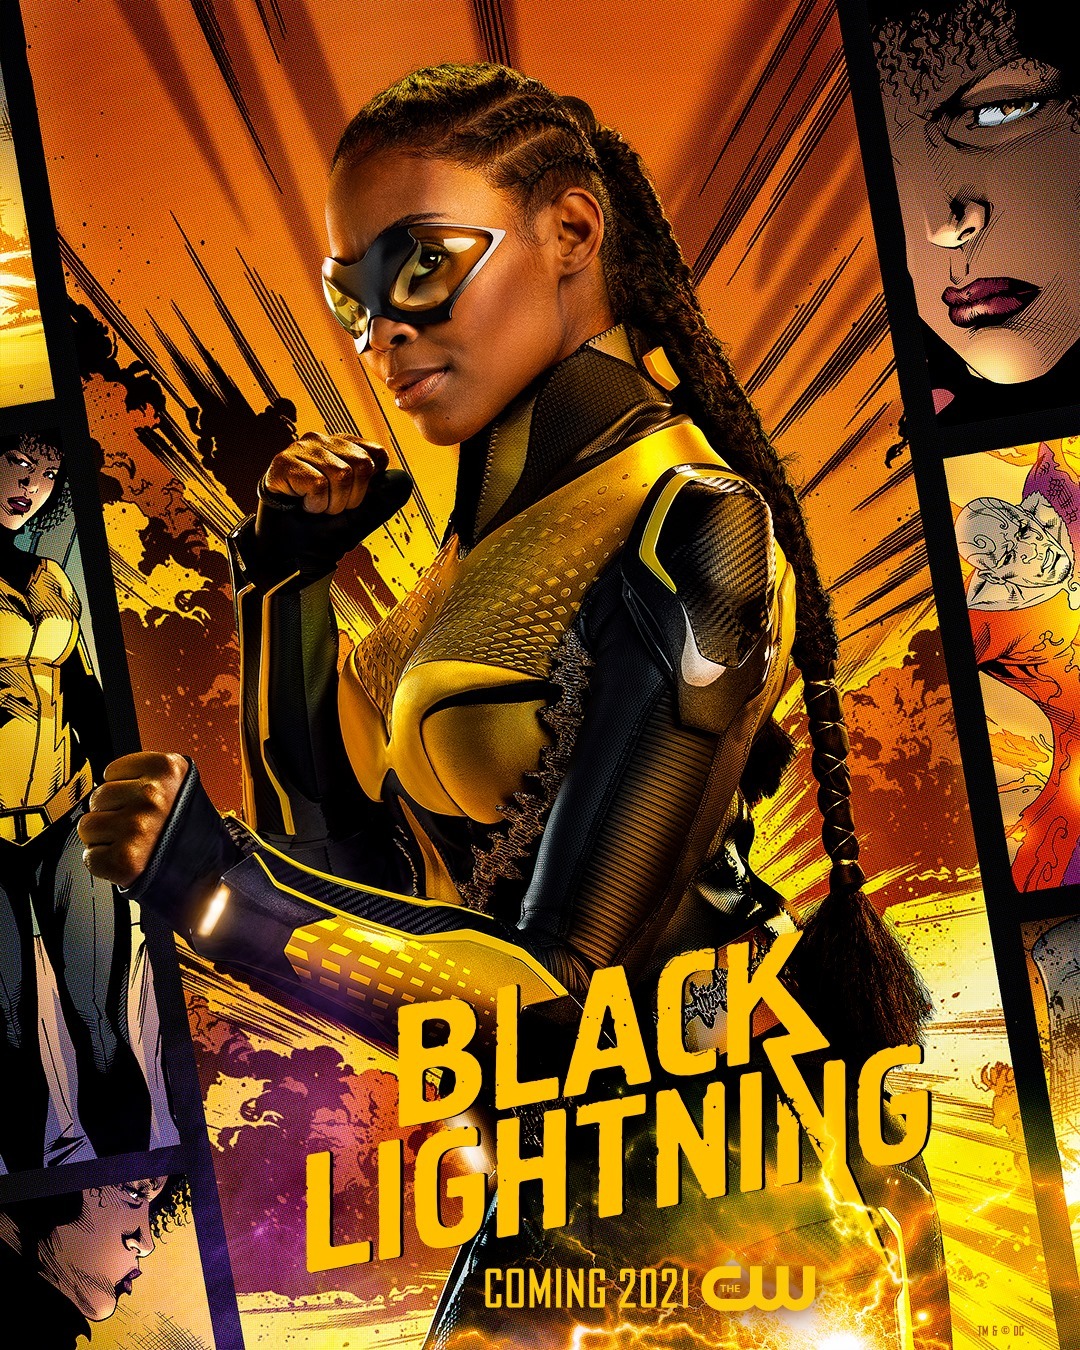 Extra Large TV Poster Image for Black Lightning (#11 of 14)